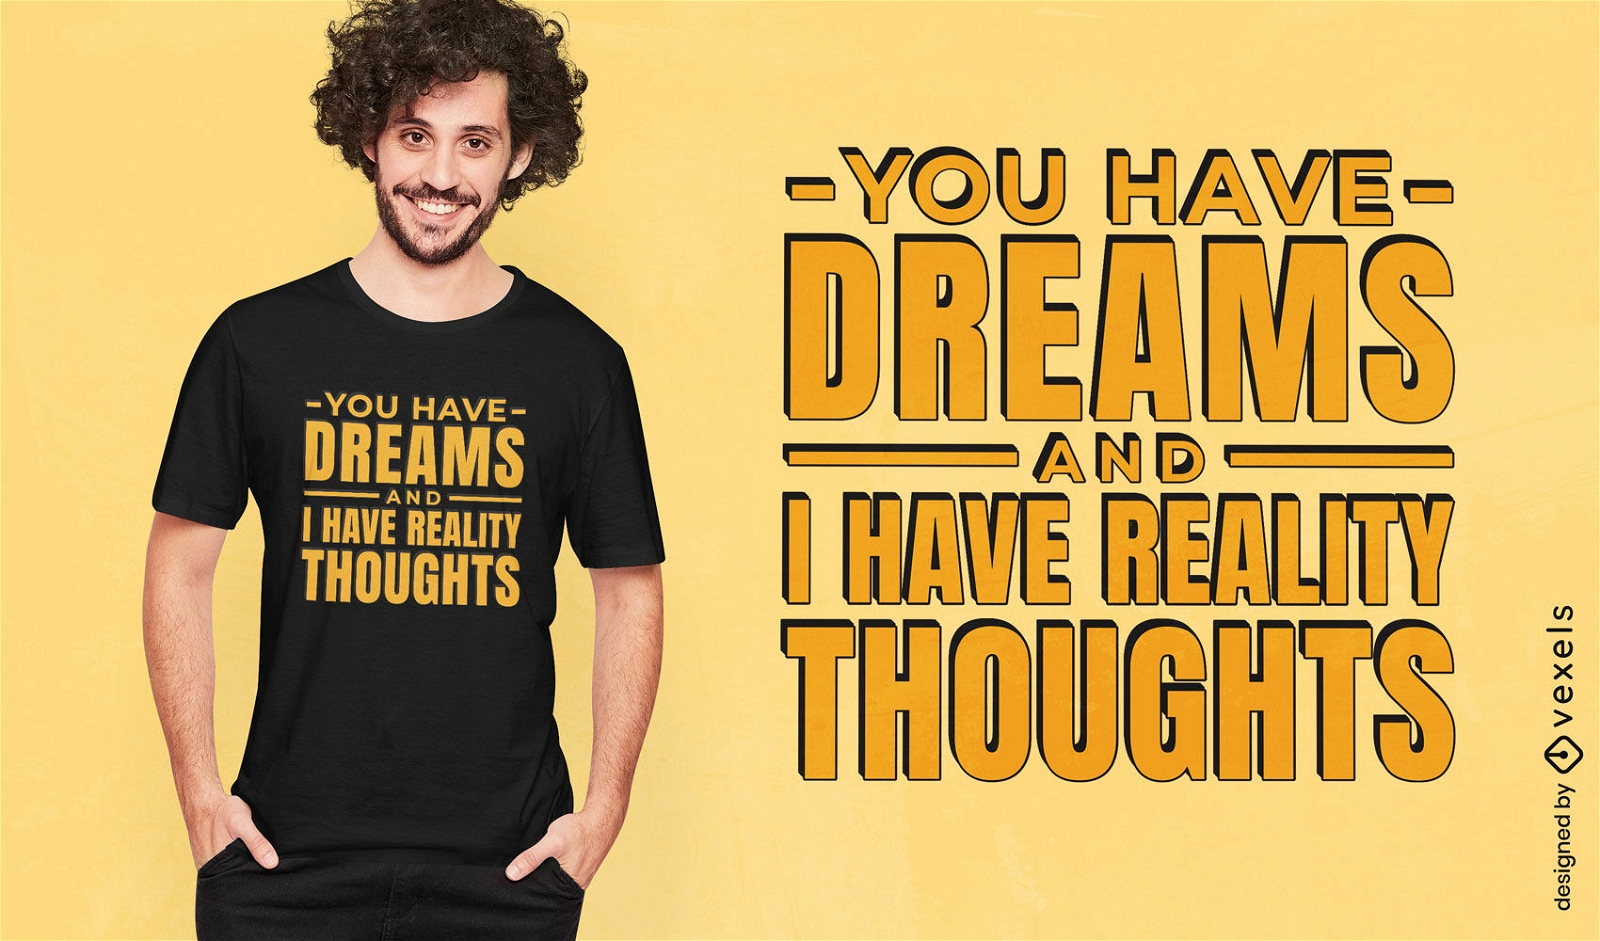 Funny dreams quote t-shirt design